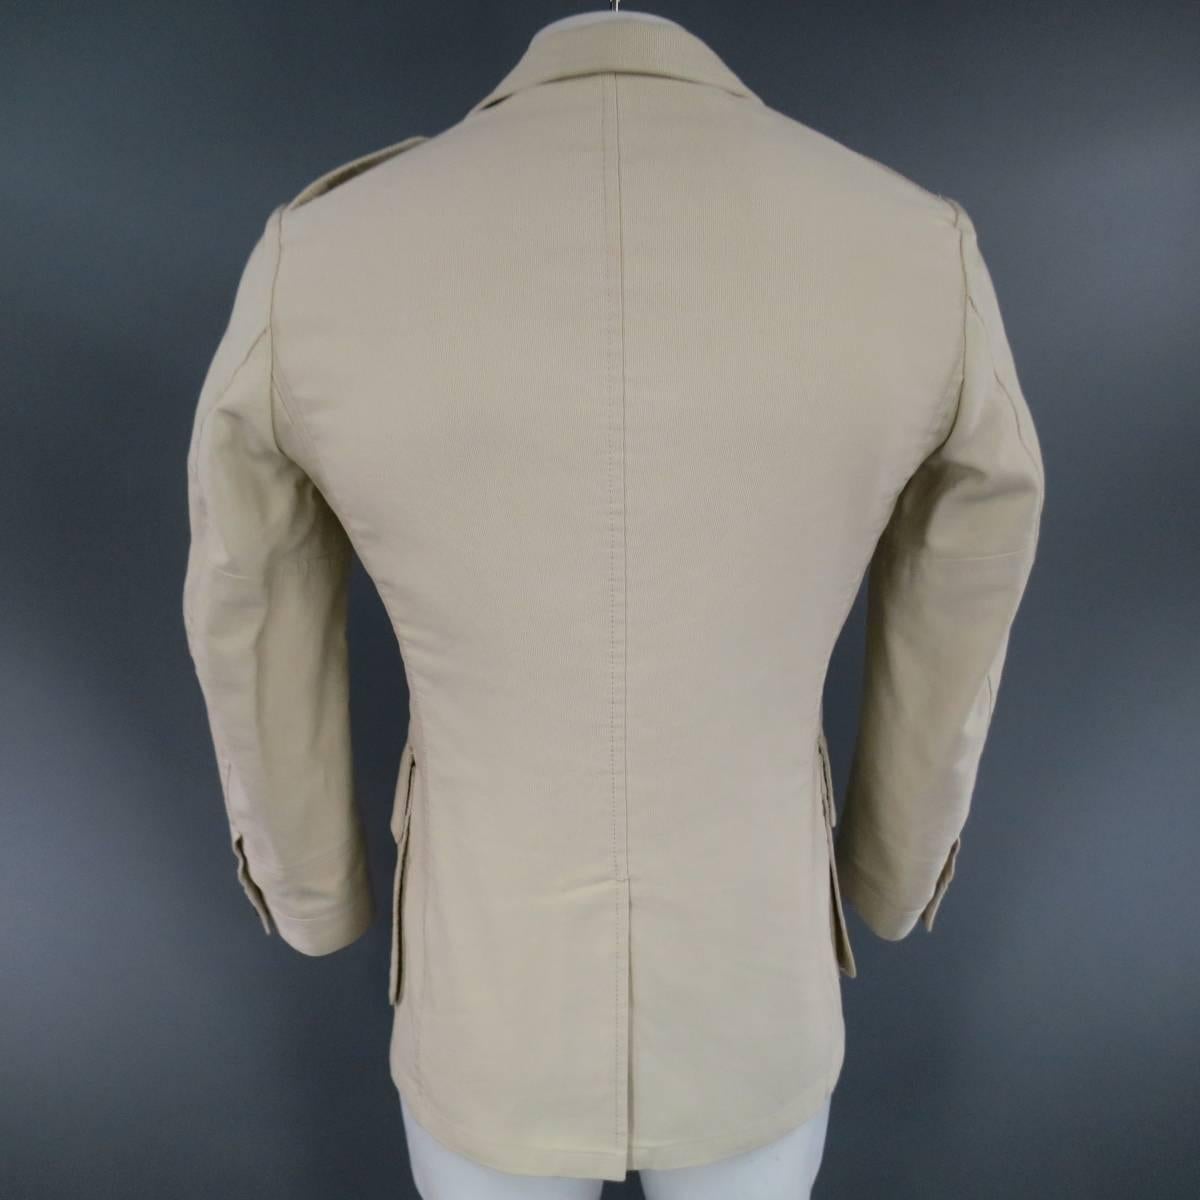  Tom Ford Men's 38 Khaki Beige Cotton Faille Patch Pockets Safari Jacket 2